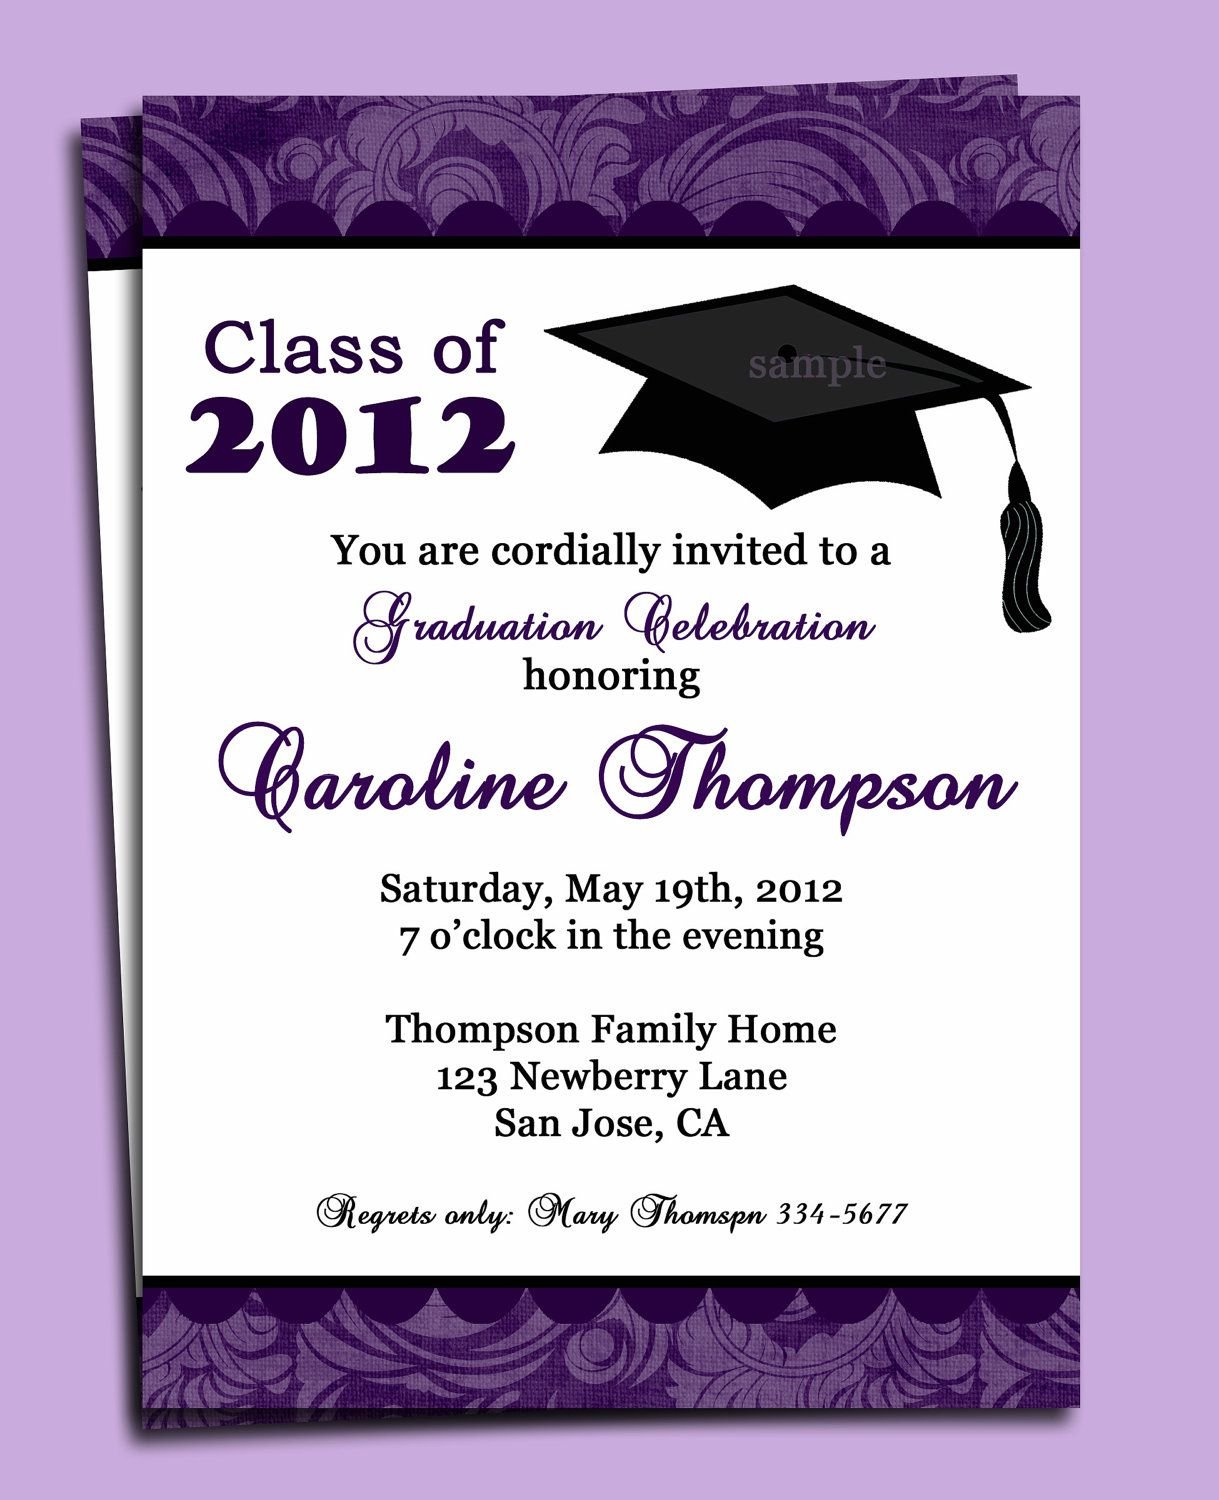 Invitation Card For Graduation Party   Sample Invitation Card For